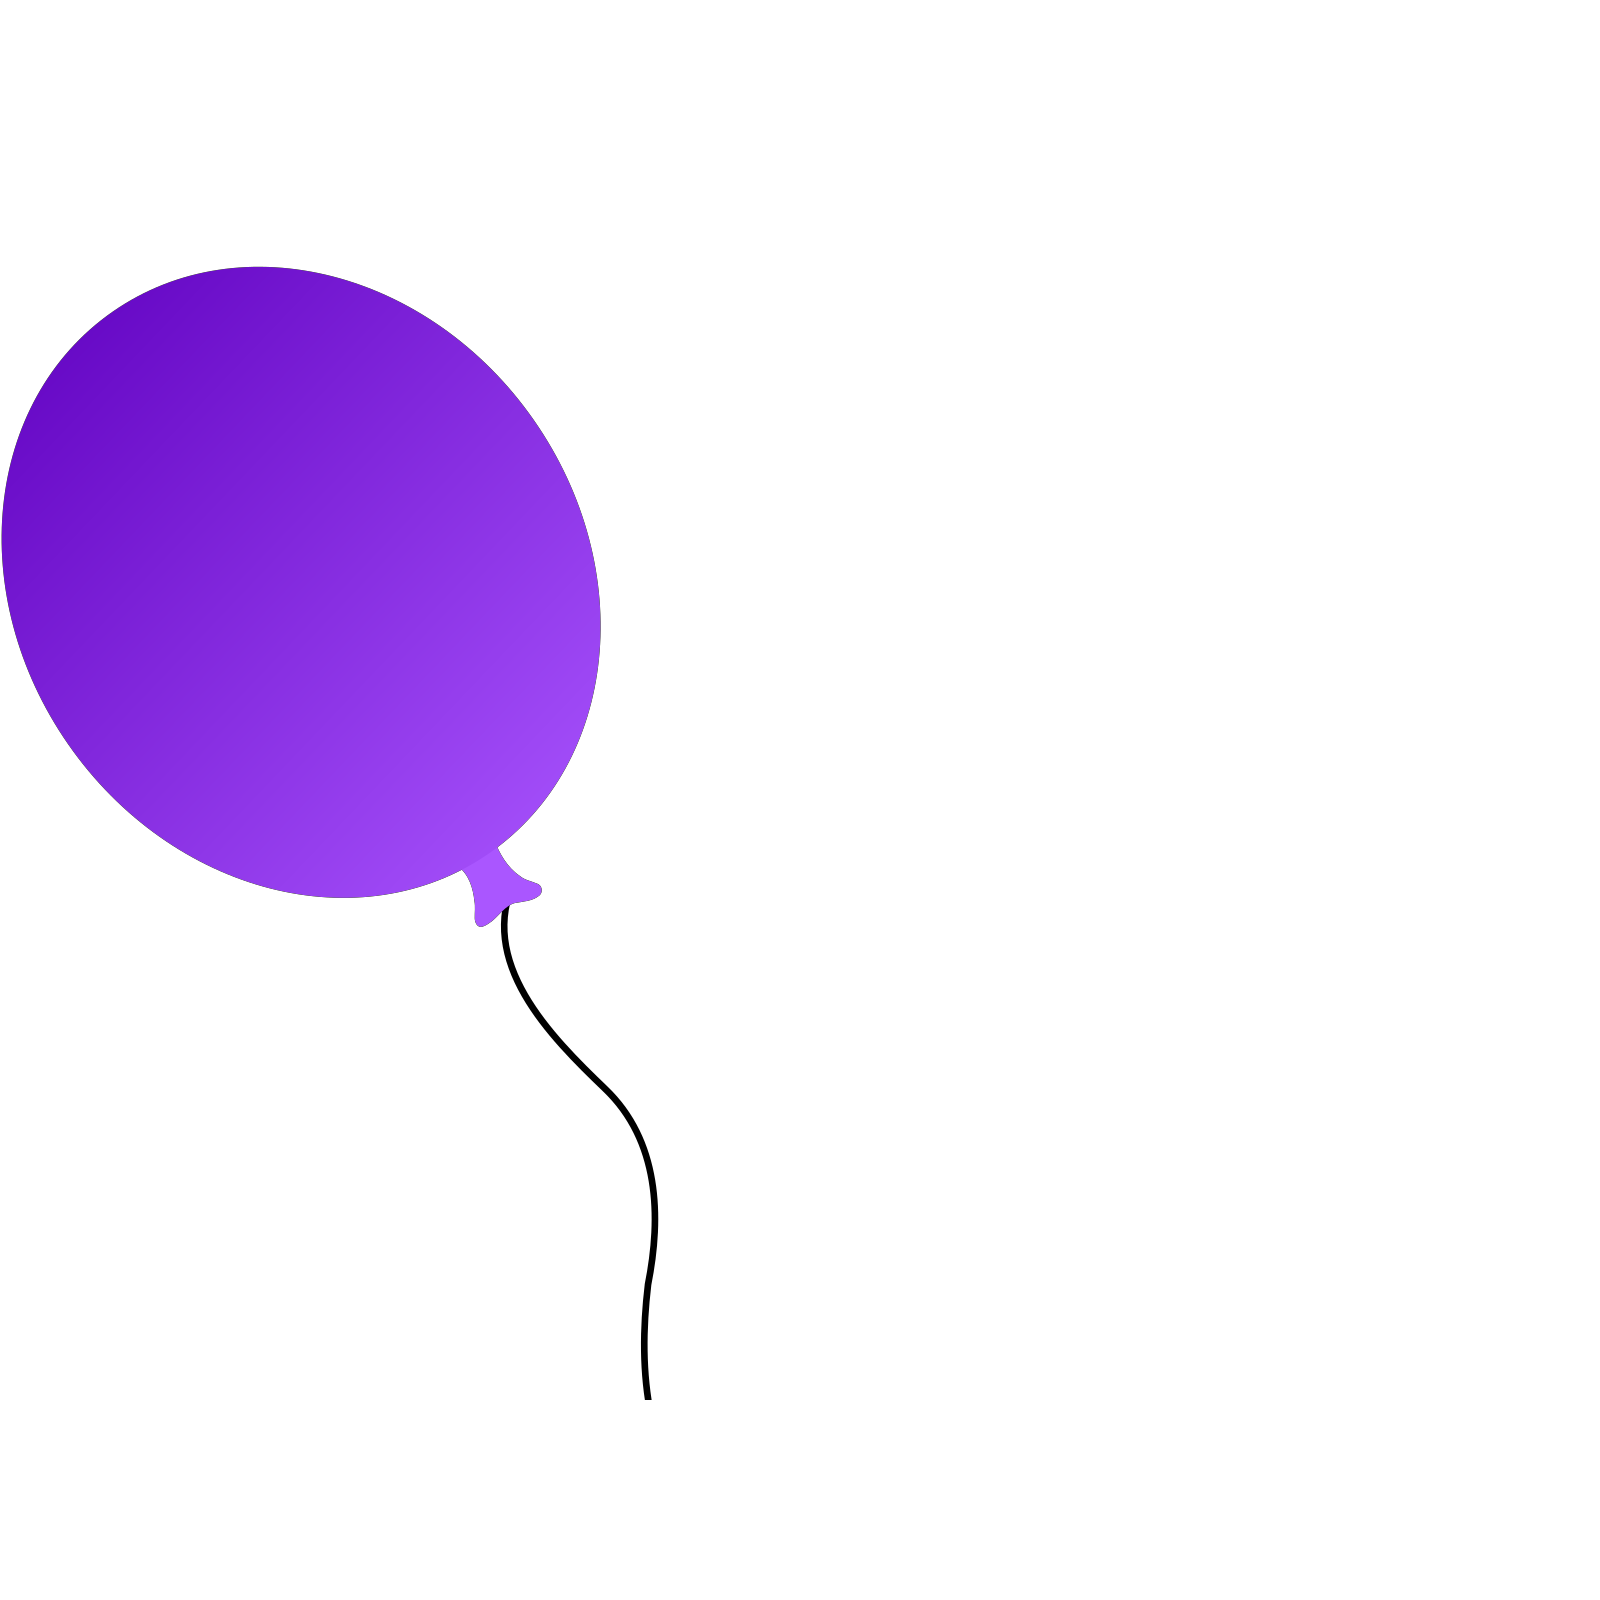 Single Purple Balloon PNG Image Background